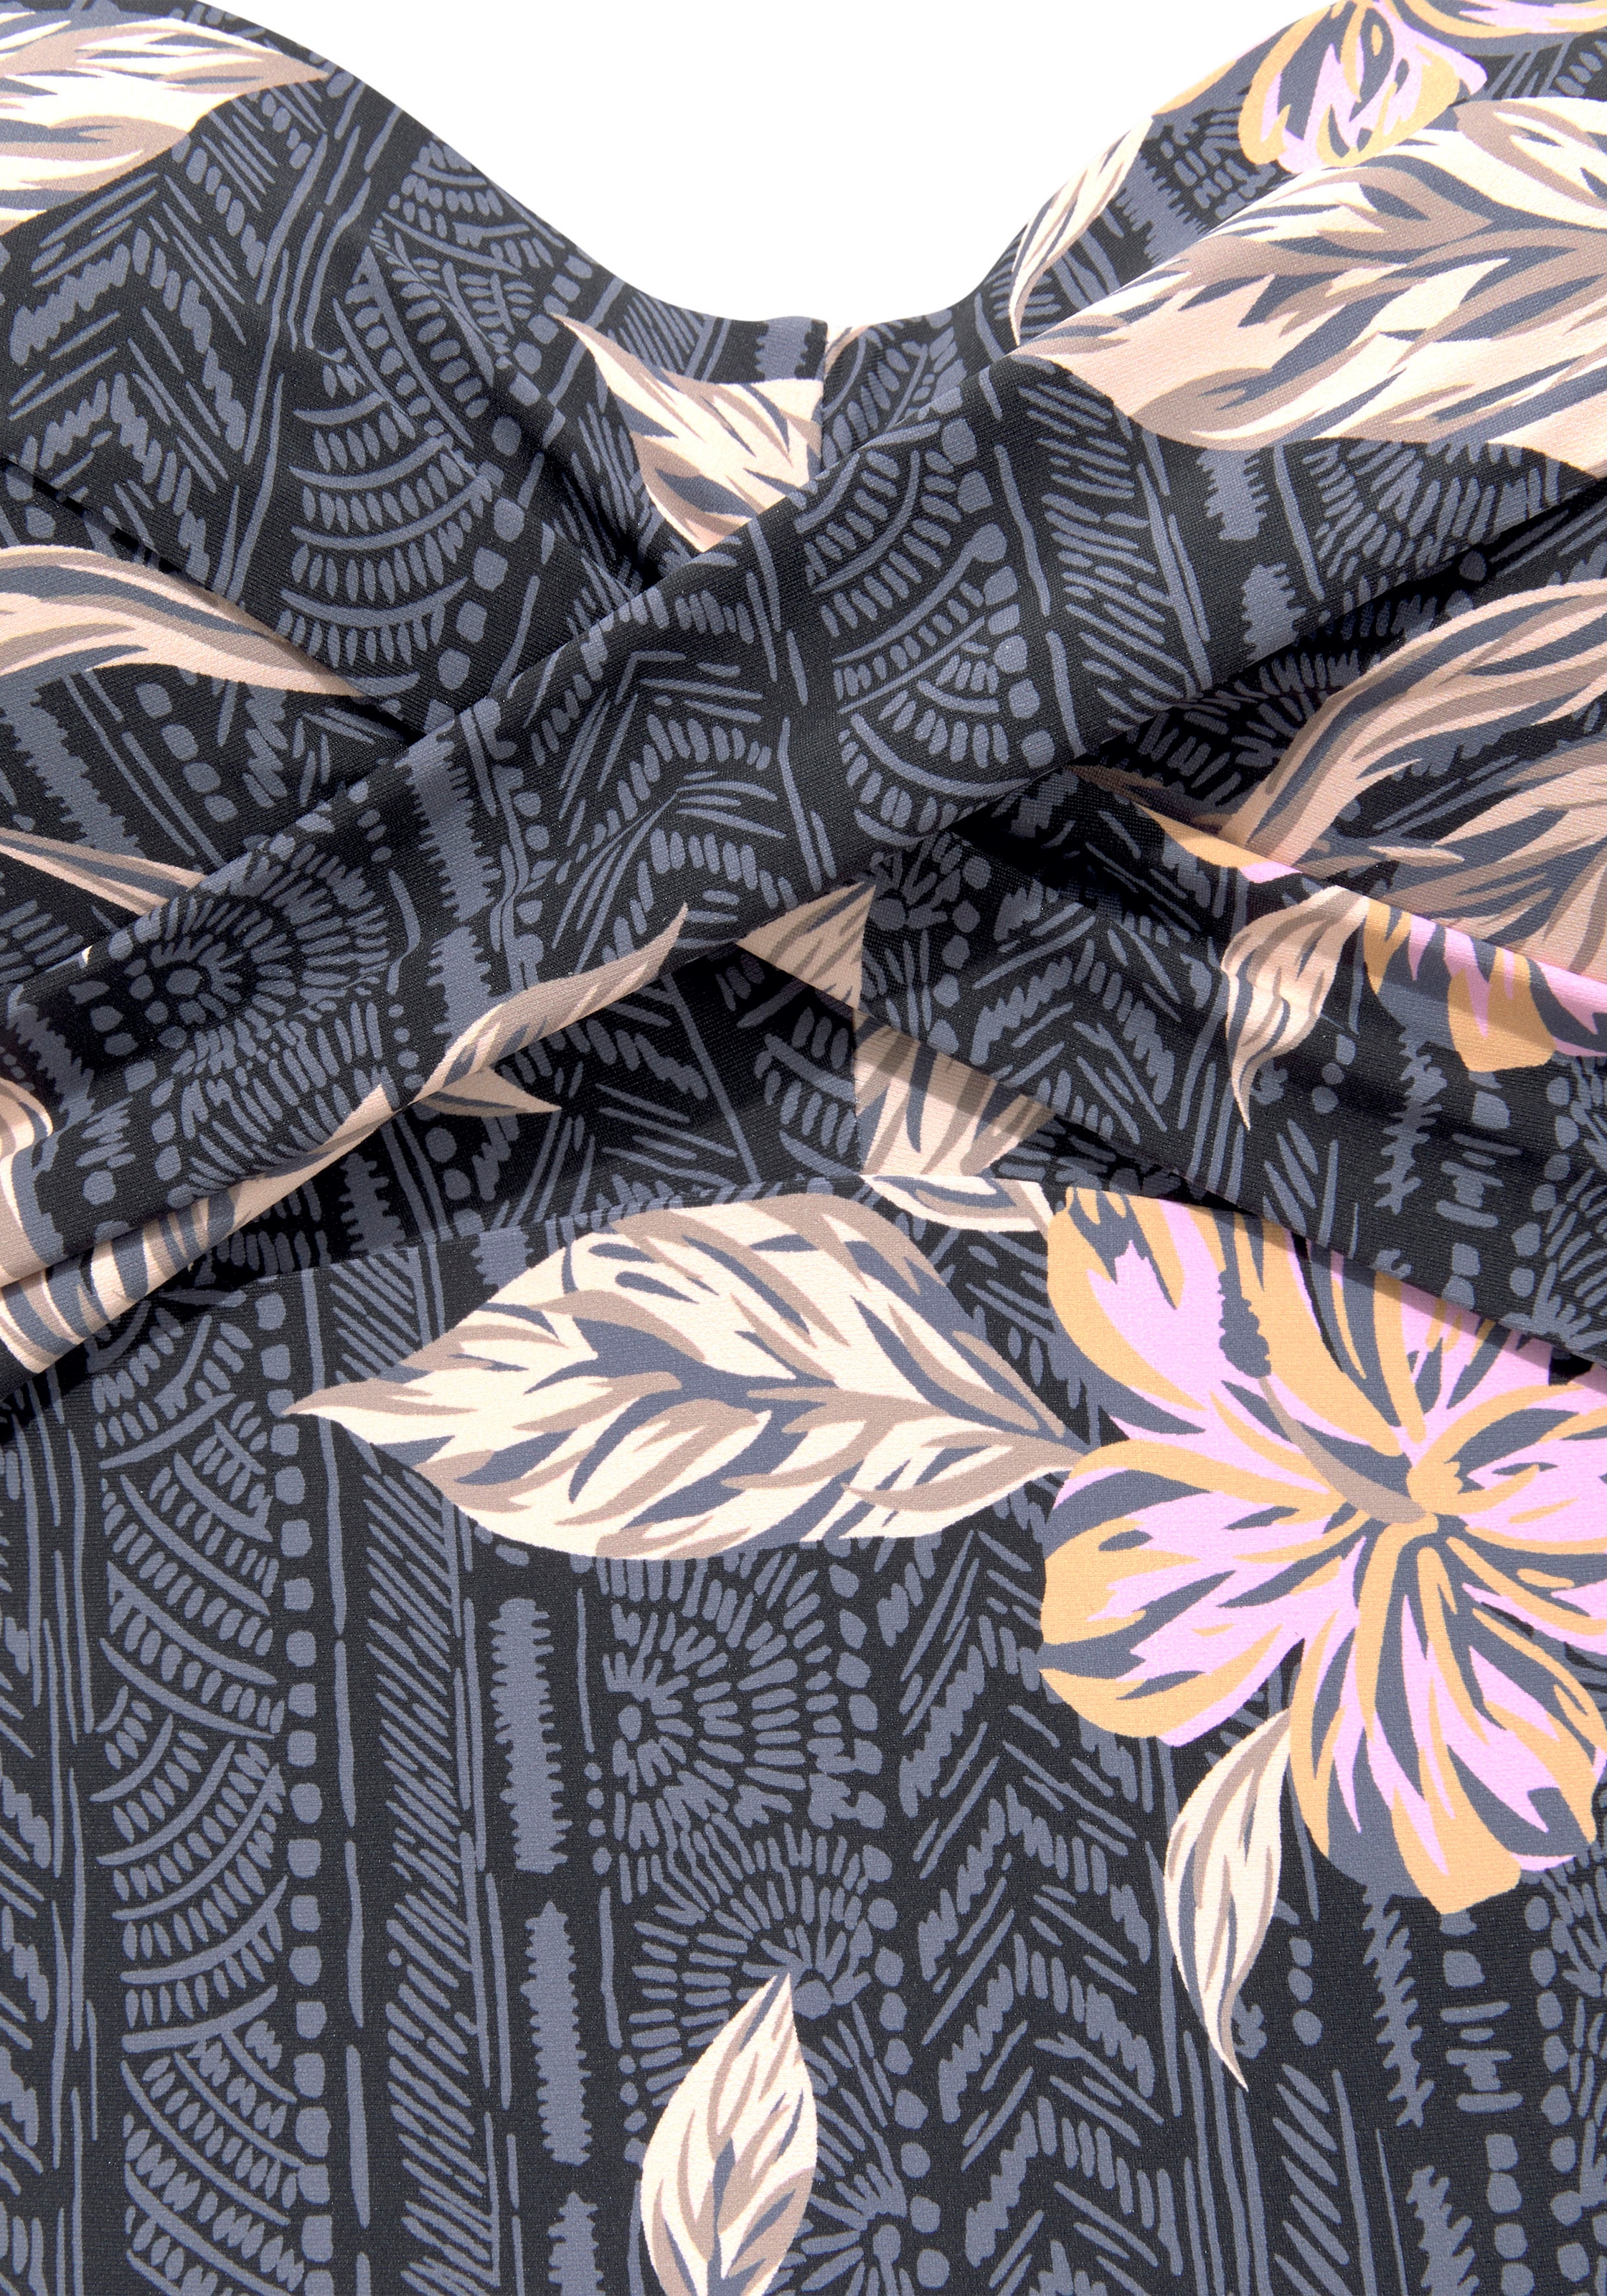 Sunseeker Badeanzug, mit grafisch-floralem Muster